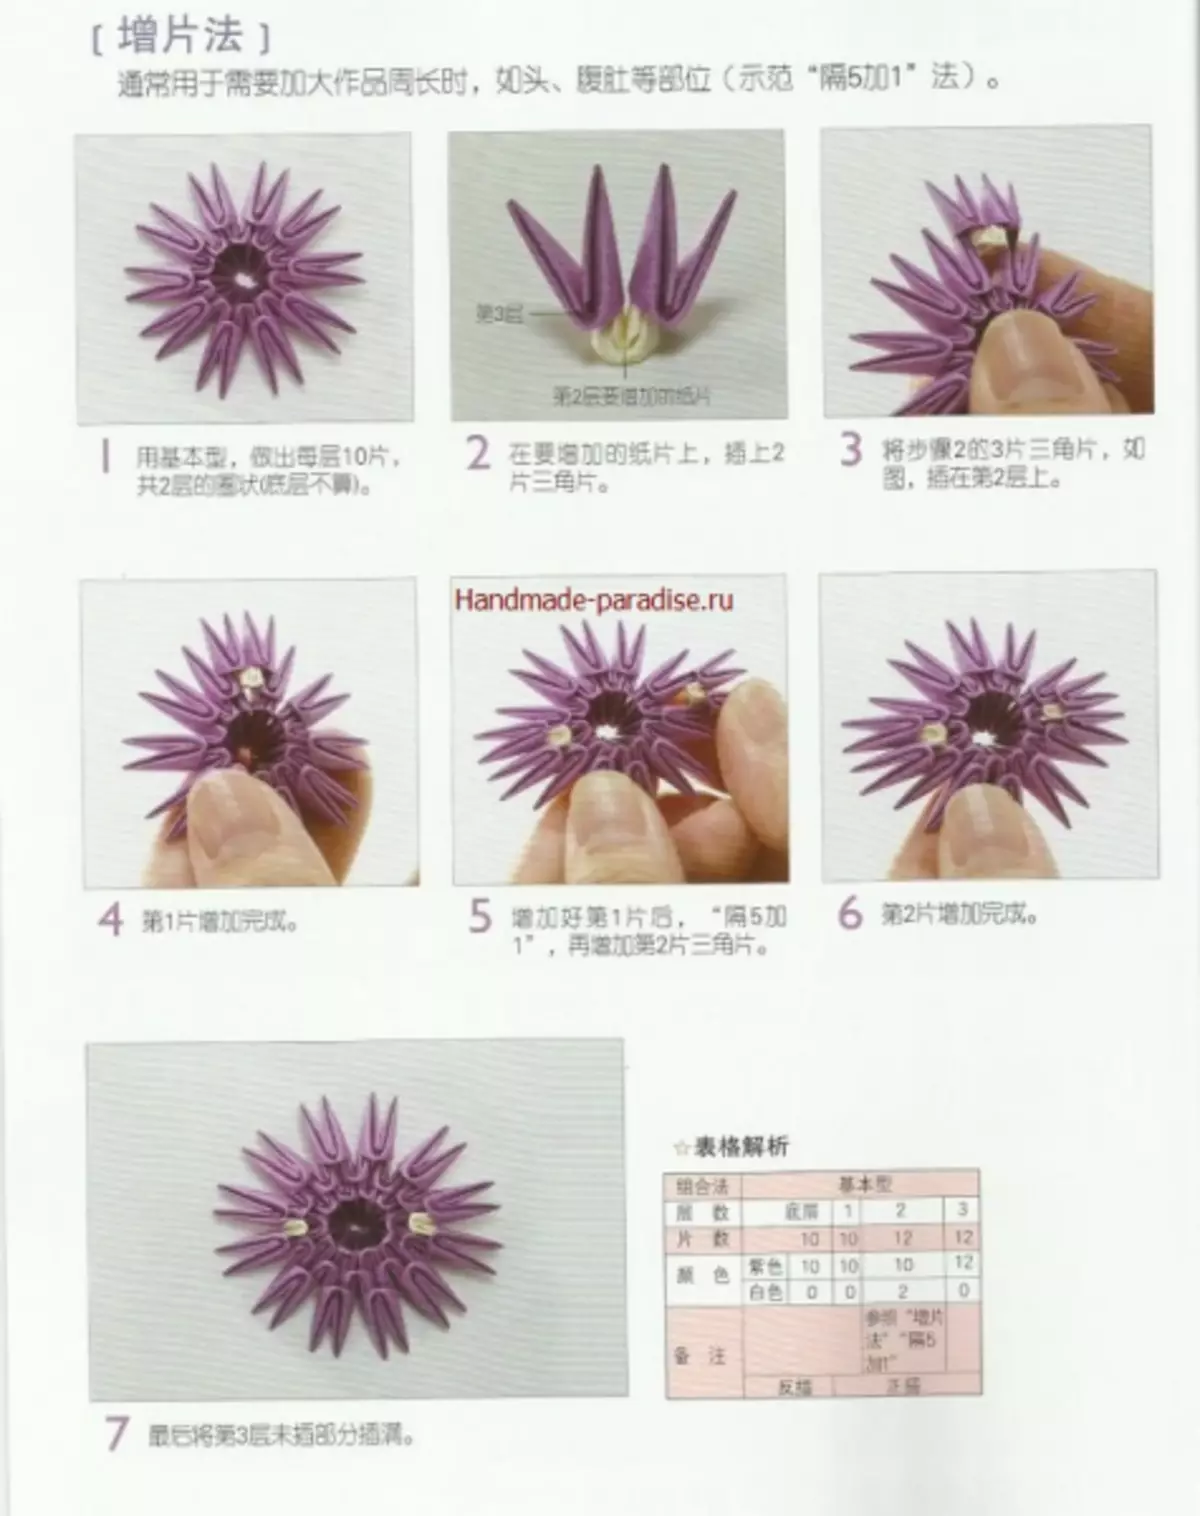 Origami modular. Revista japonesa con clases magistrales.